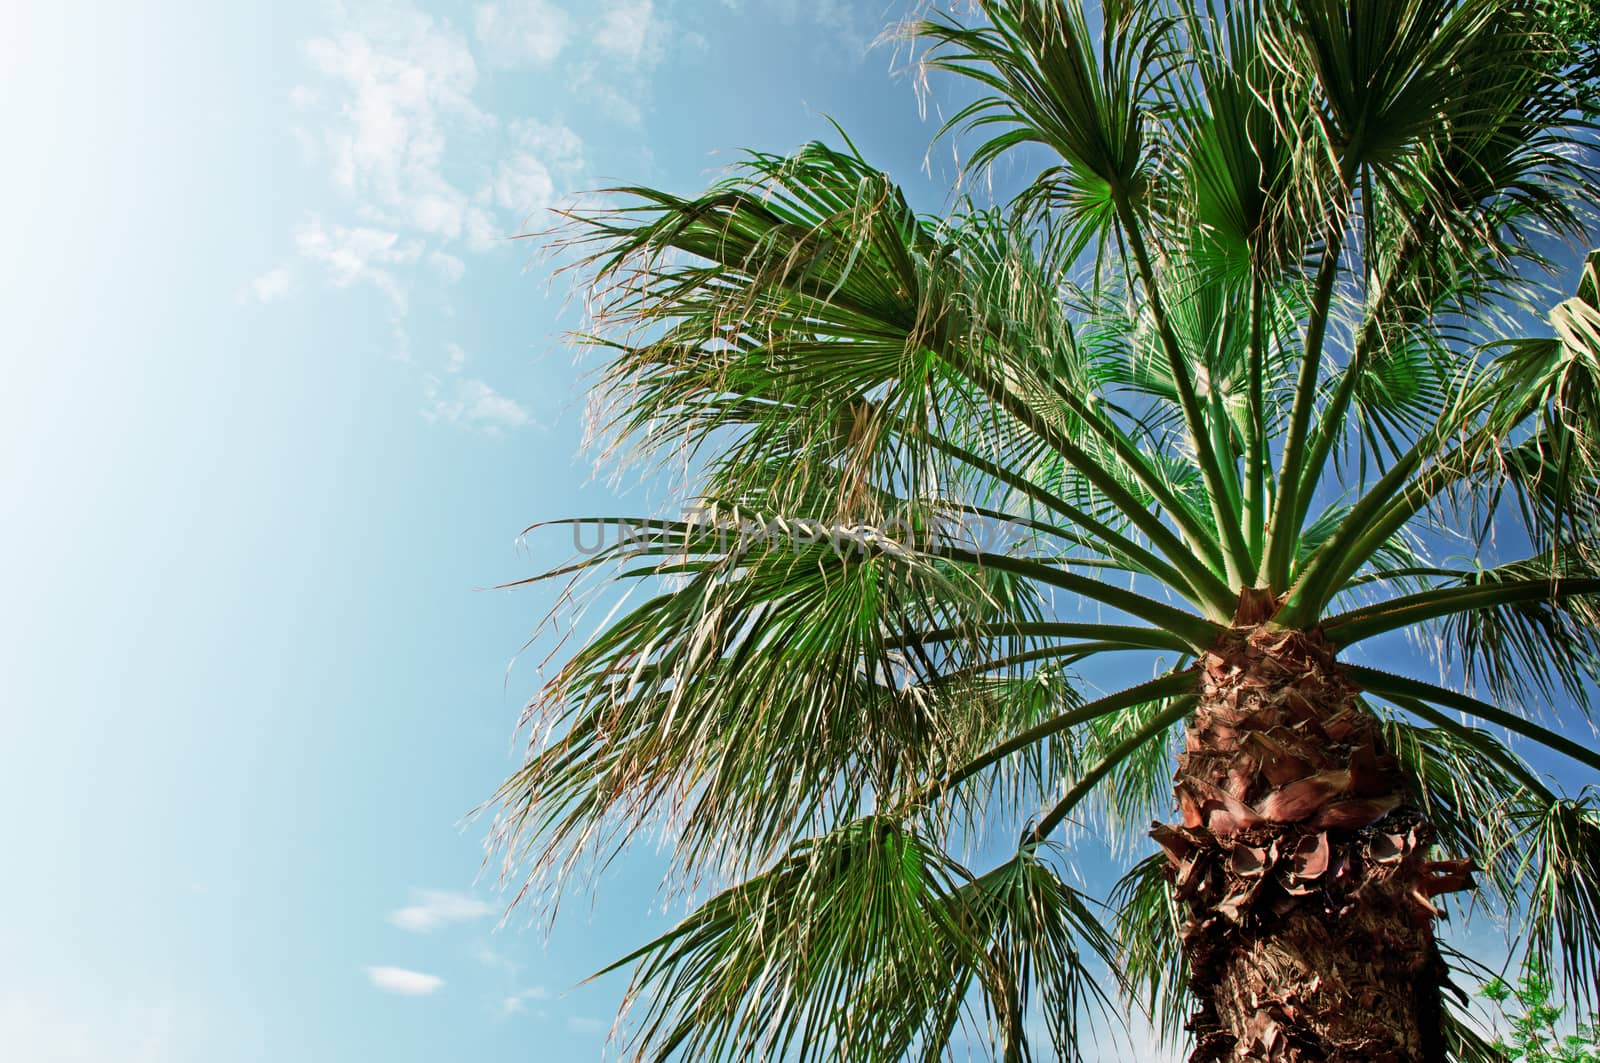  palm tree on background of blue sky